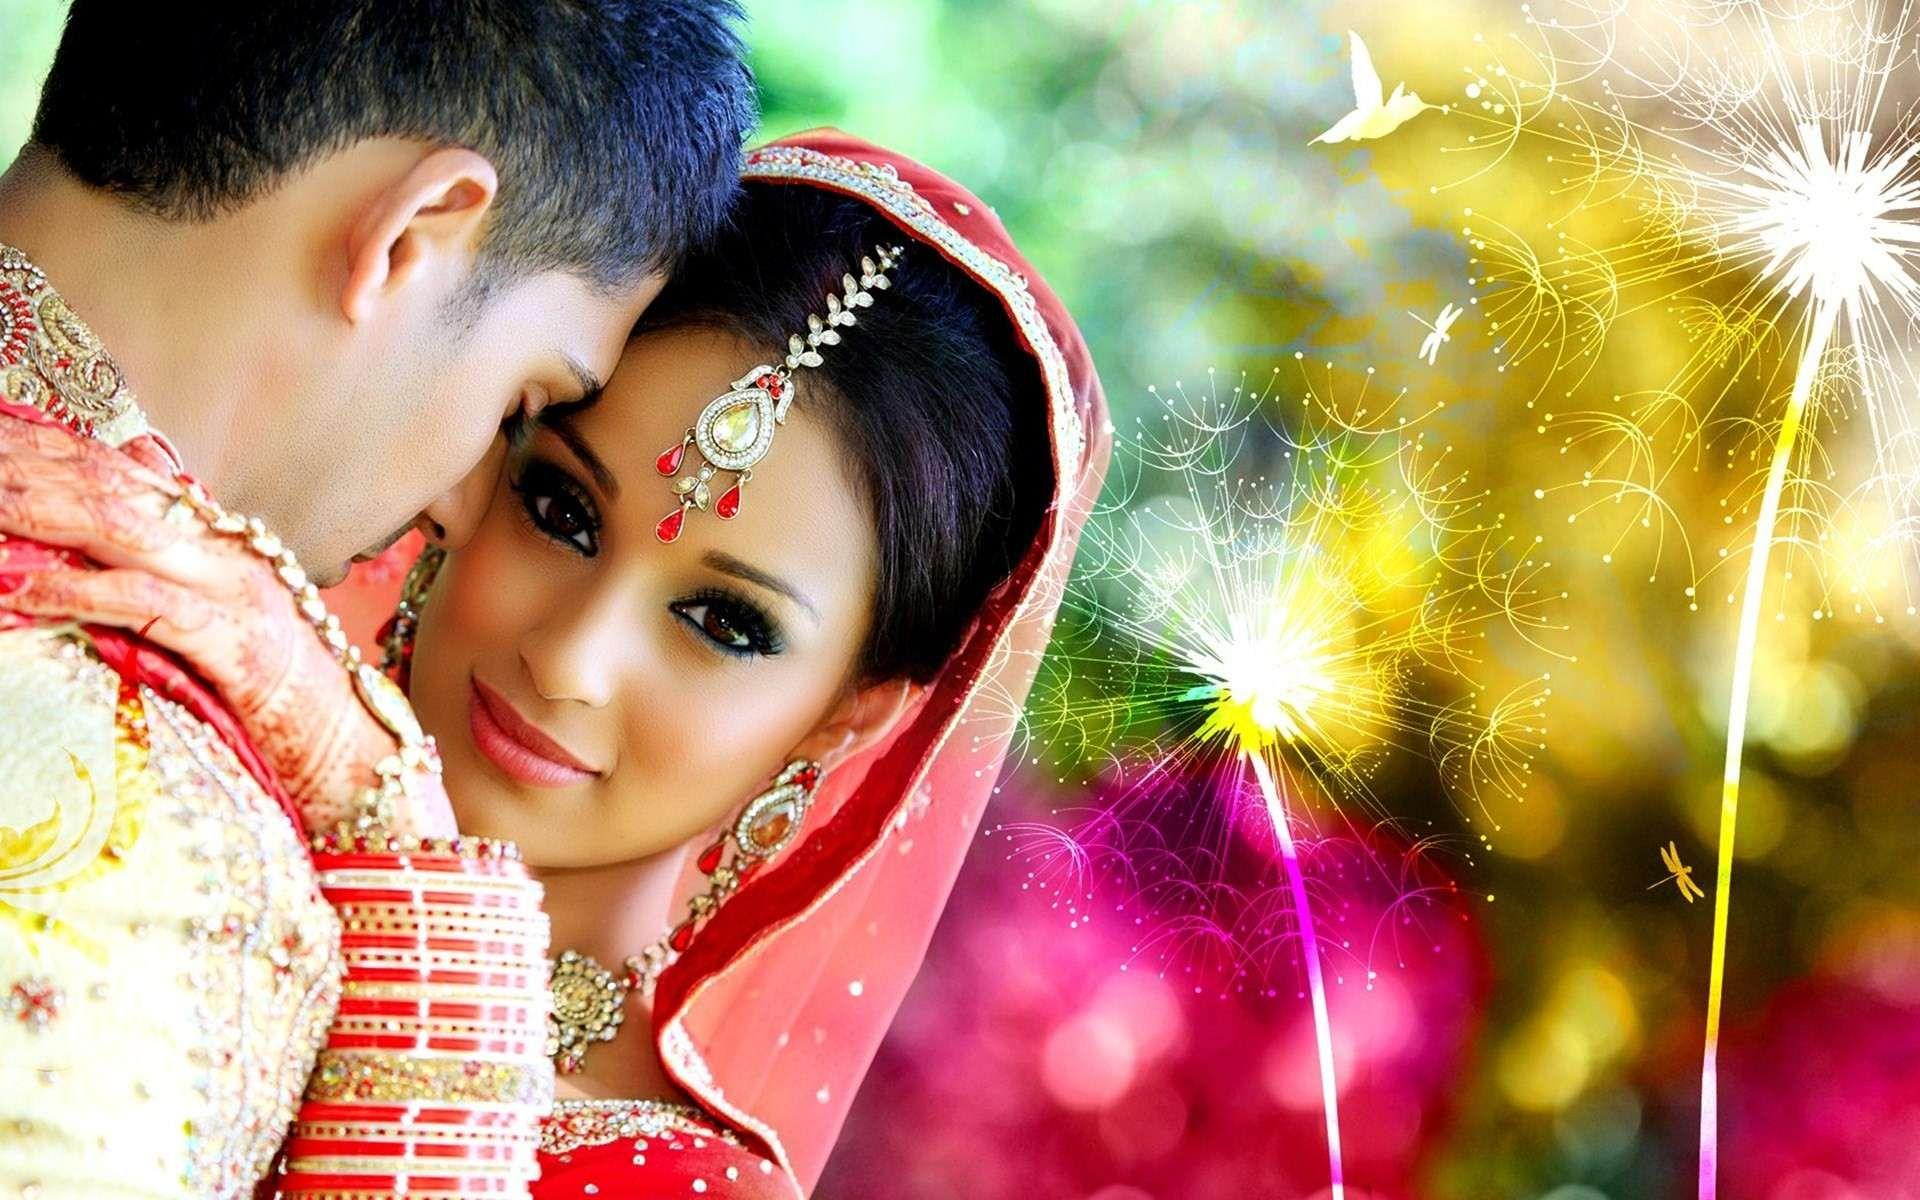 Indian Wedding Wallpaper 1080p for HD Wallpaper Deskx1200 px 243.33 KB. Indian wedding photography, Wedding photography, Photography wallpaper